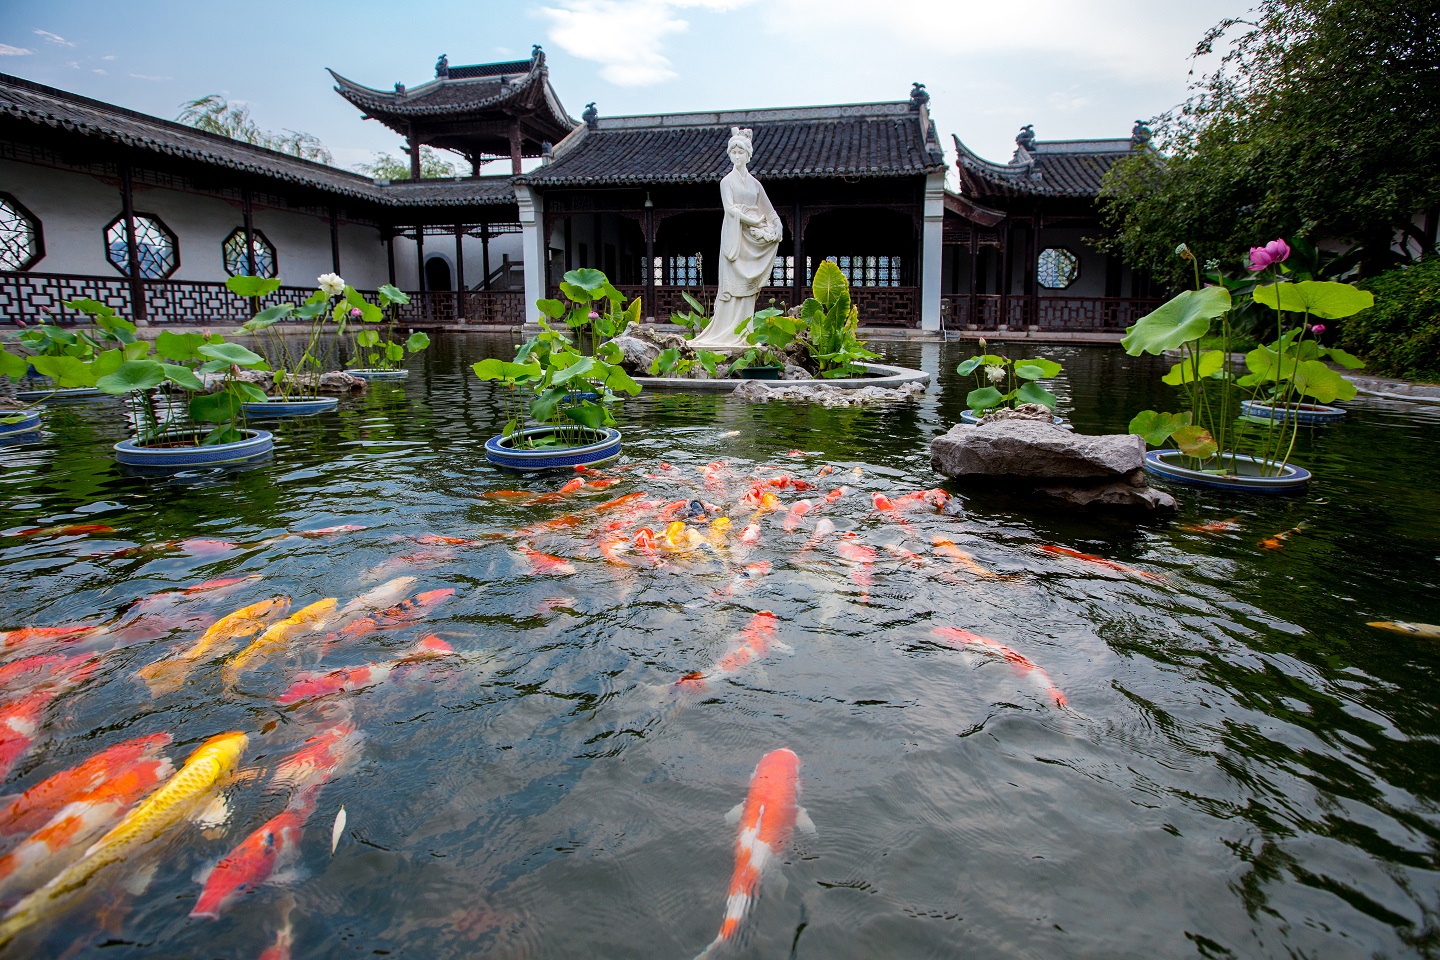 Nanjing's Dragon Boat Festival will be held at Mochou Lake June 16 - 18